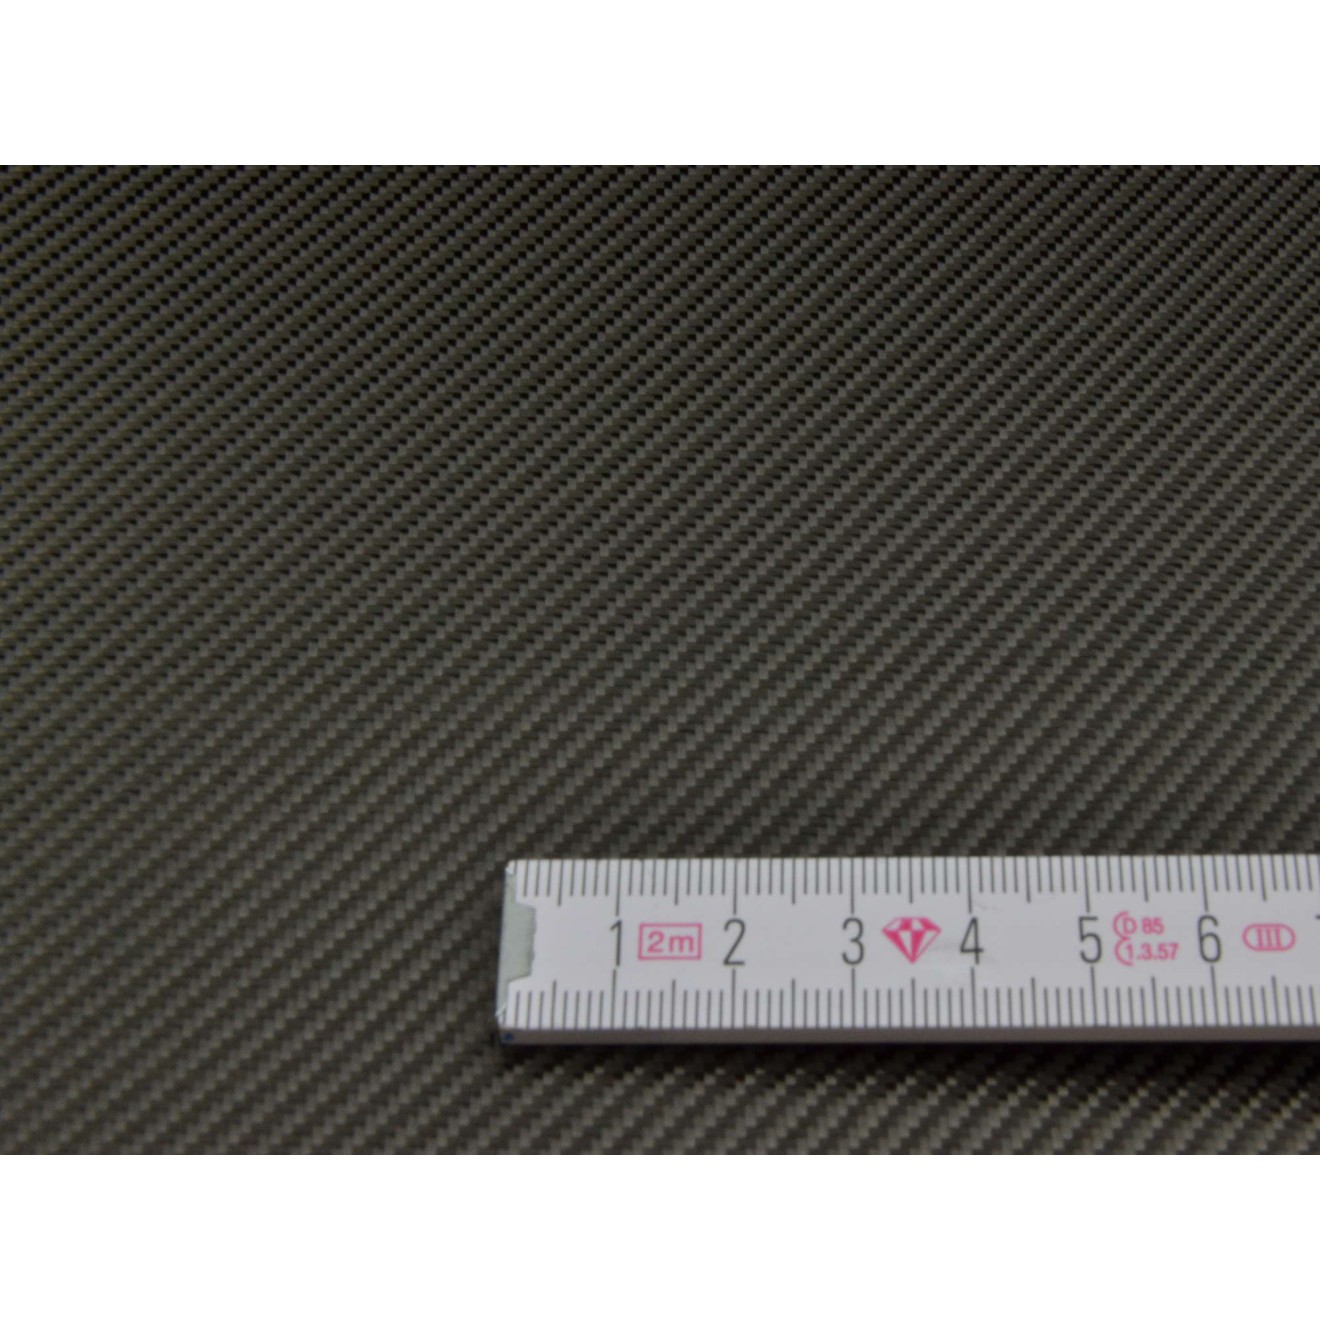 Woven carbon fiber fabric 1K 150g/m², twill 2/2